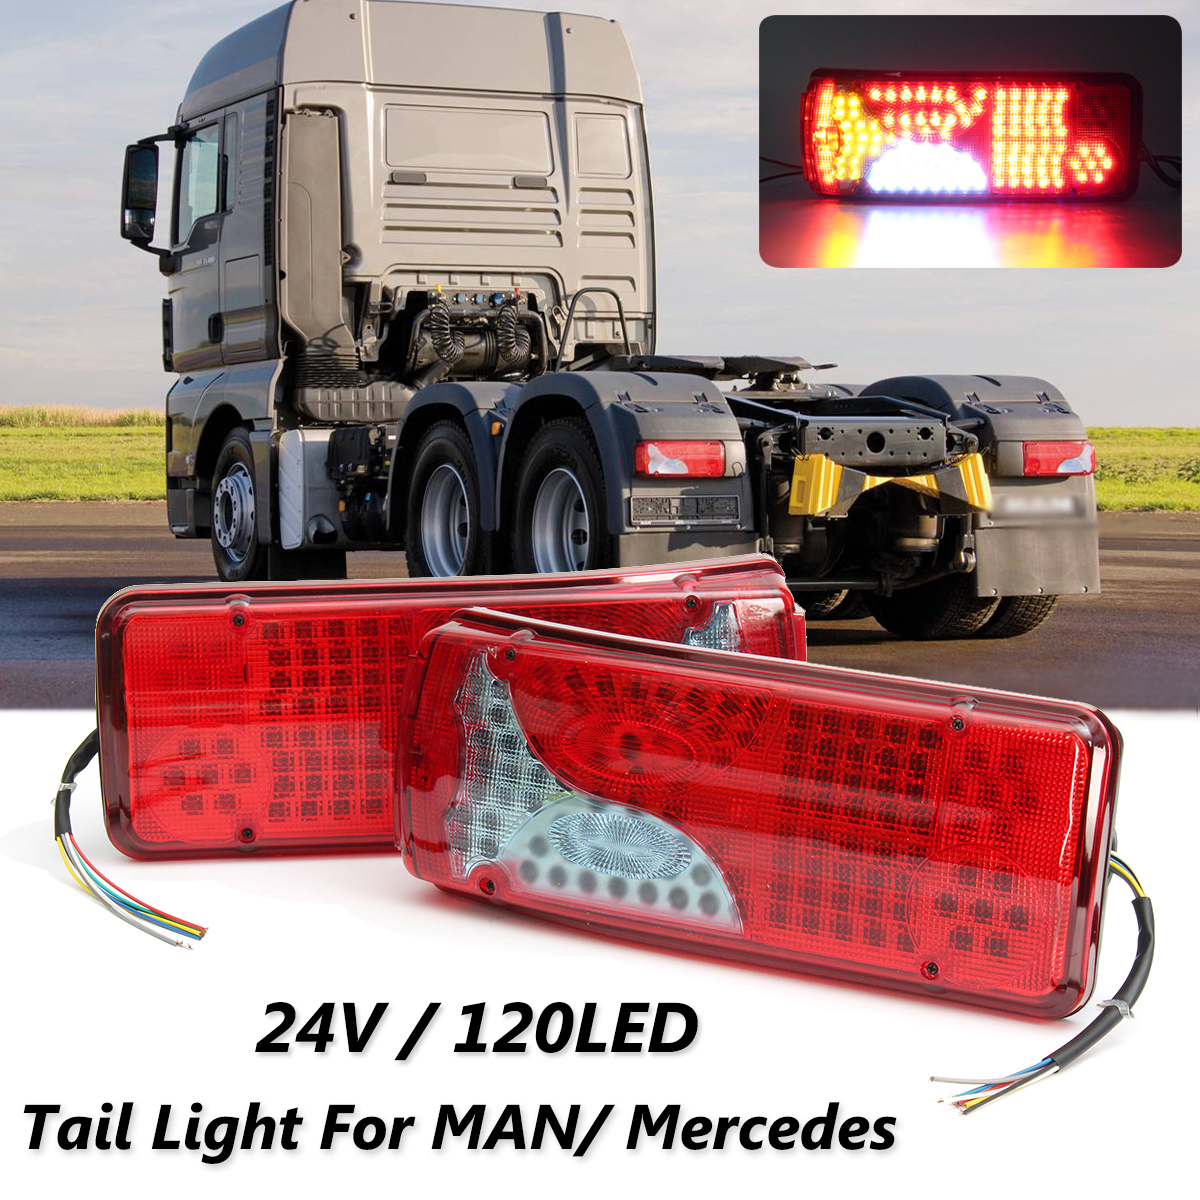 Pair 24v Led Tail Lights Hamburger Rear Lamps For Daf Man Mercedes Truck Traile